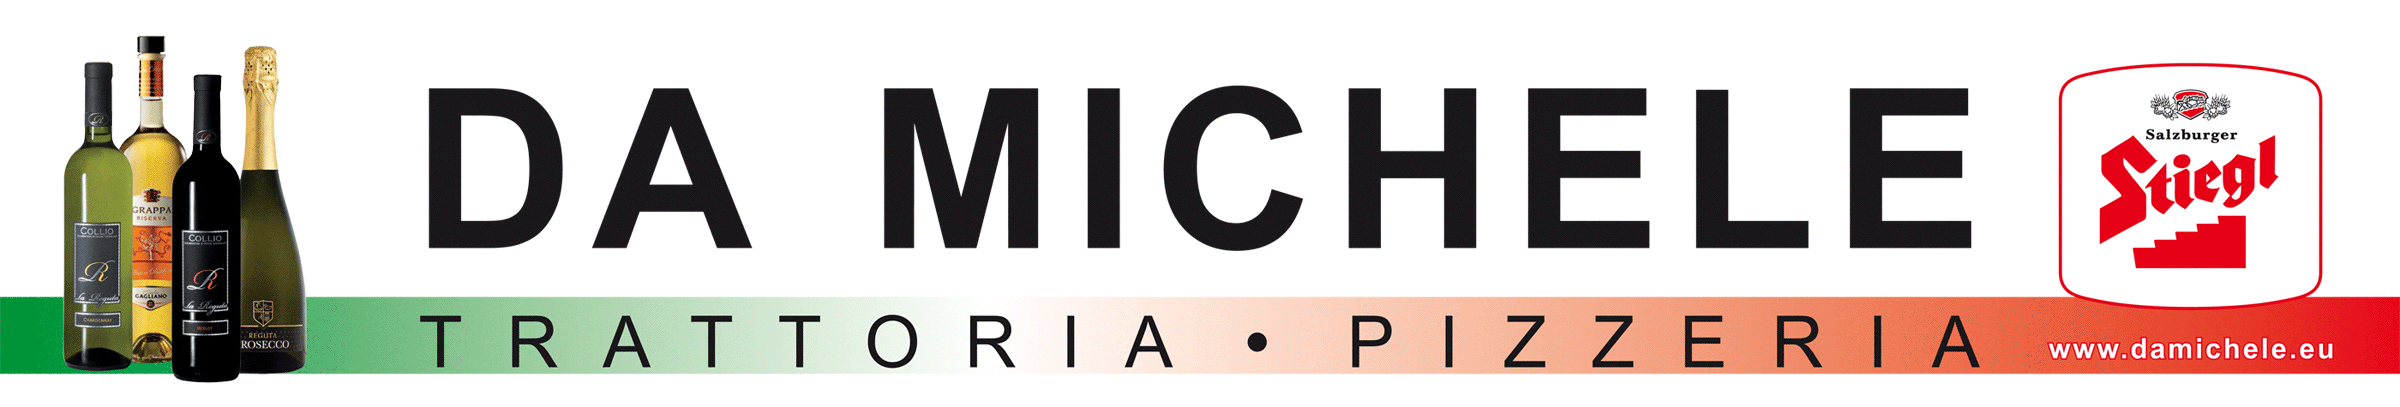 DA MICHELE - Trattoria, Pizzeria, Import/Export Logo